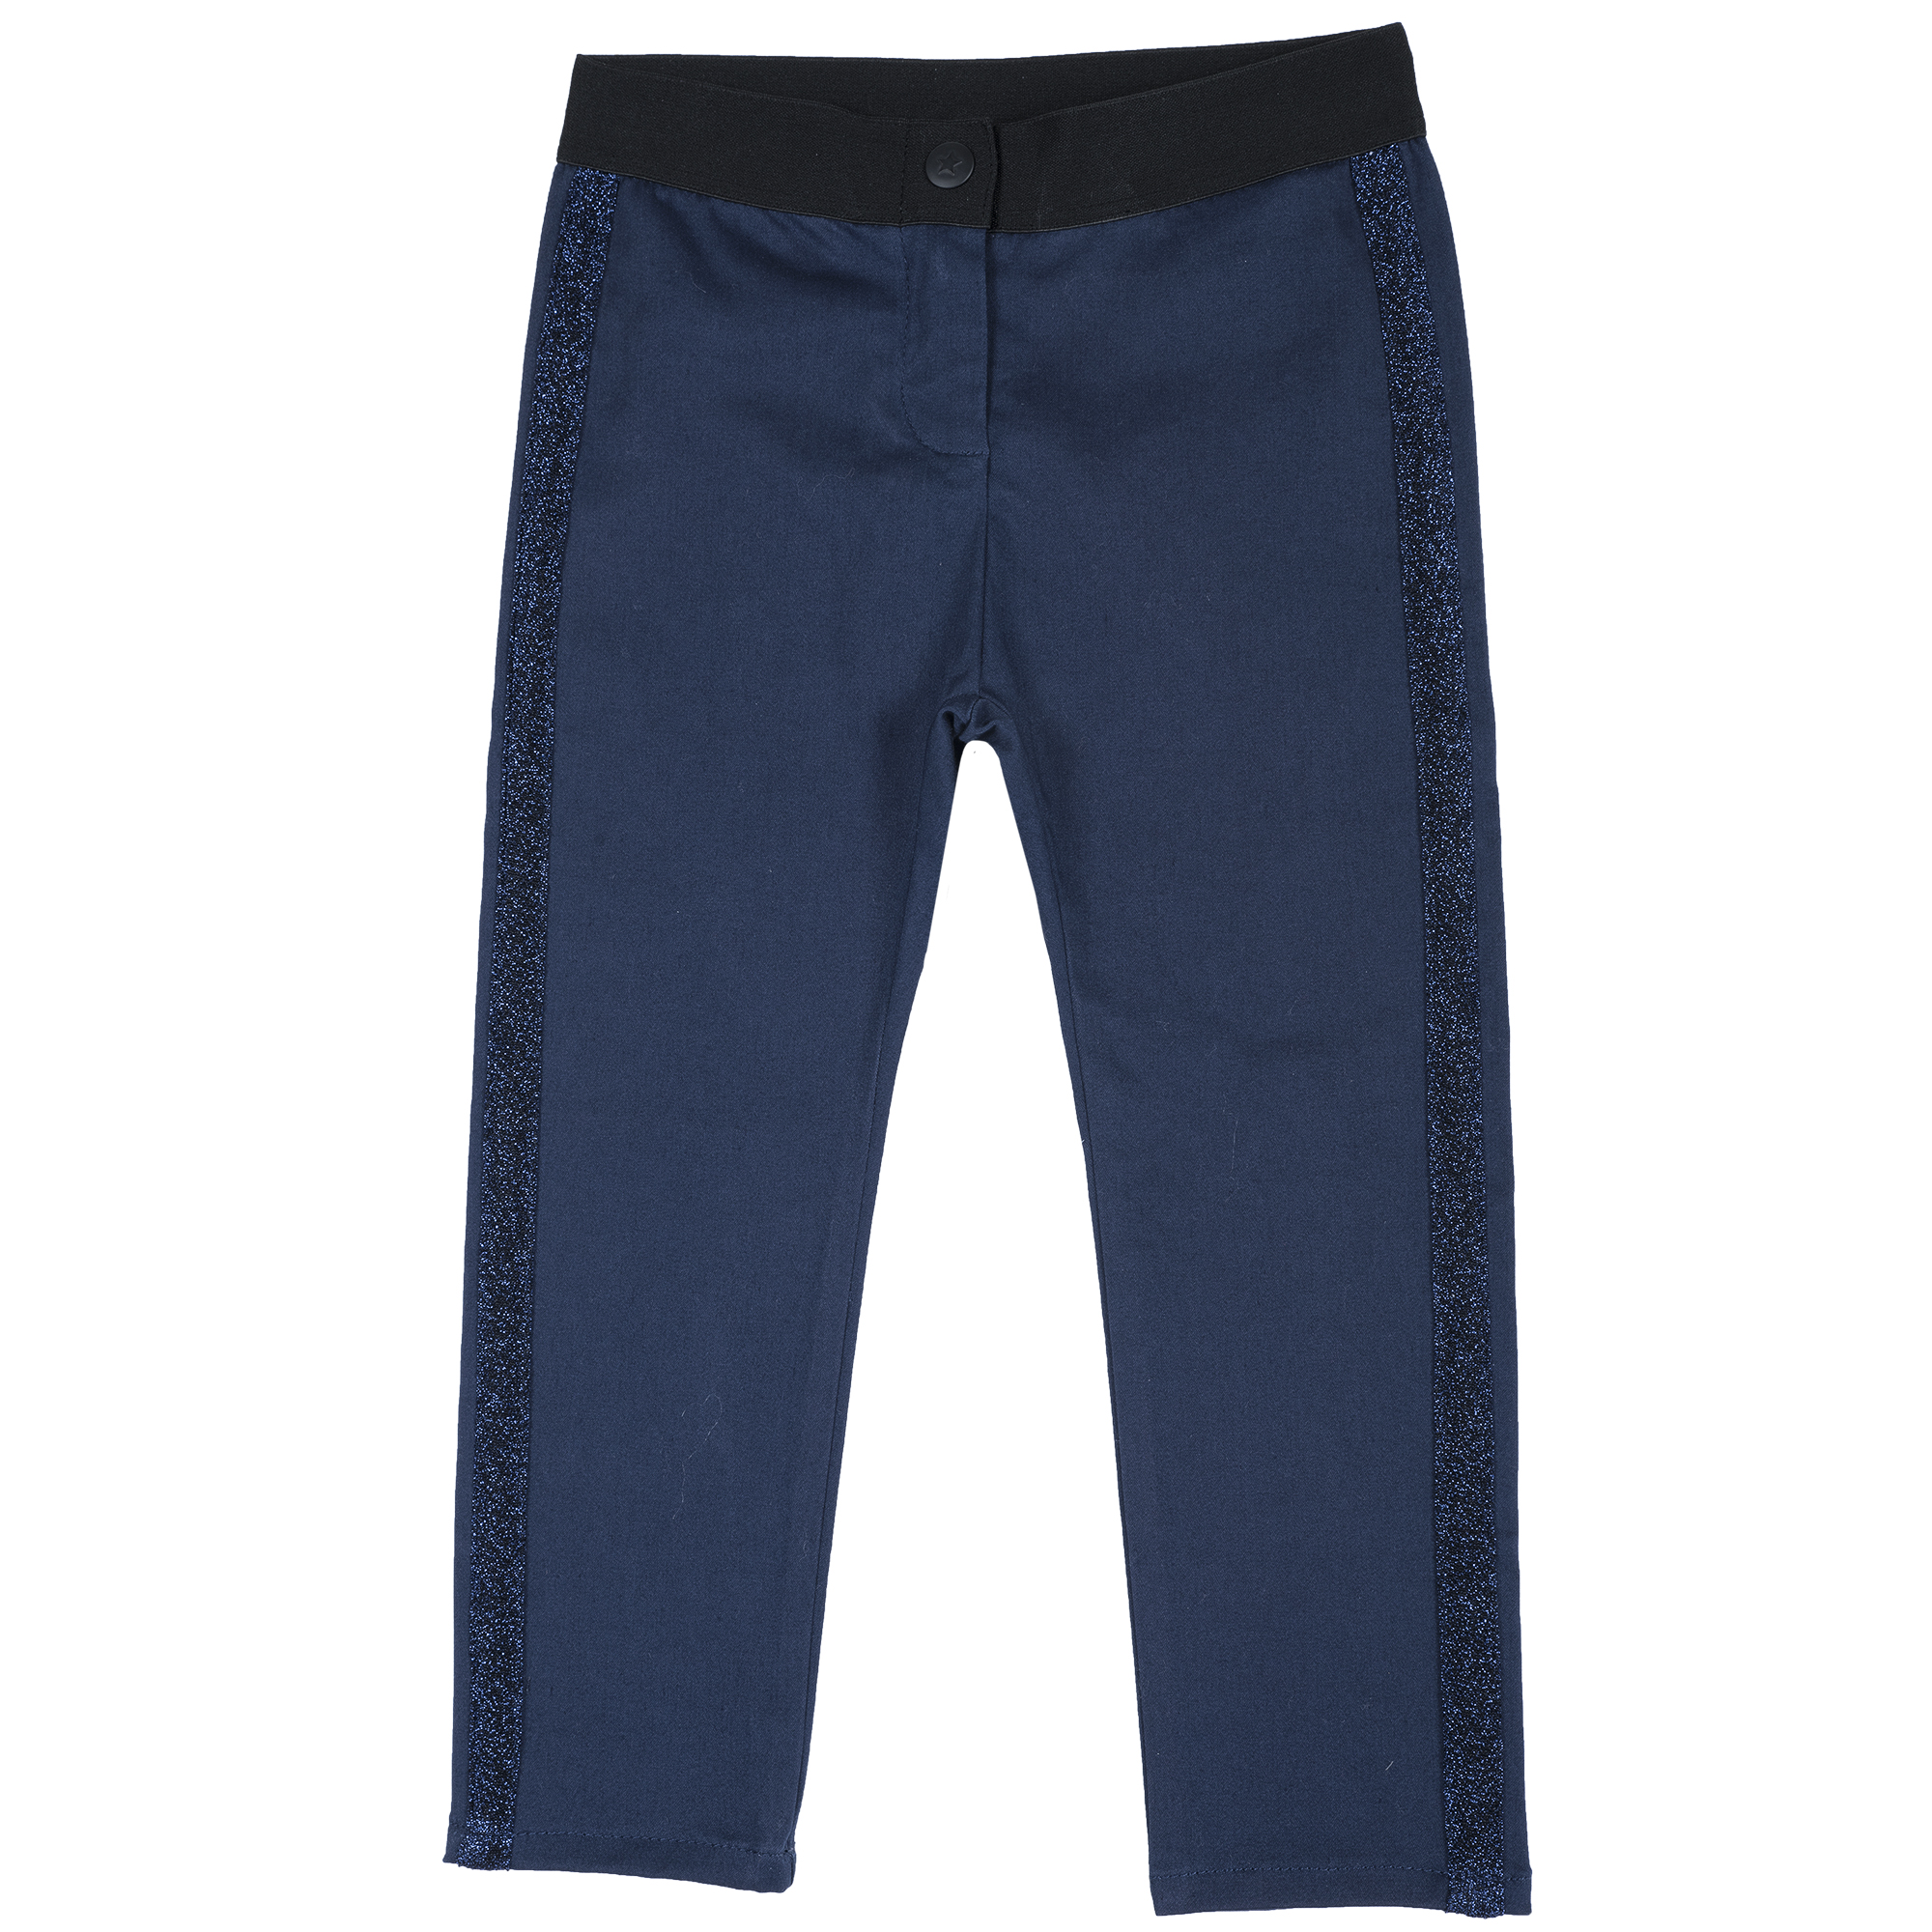 Pantaloni lungi copii Chicco, slim fit, albastru, 08089